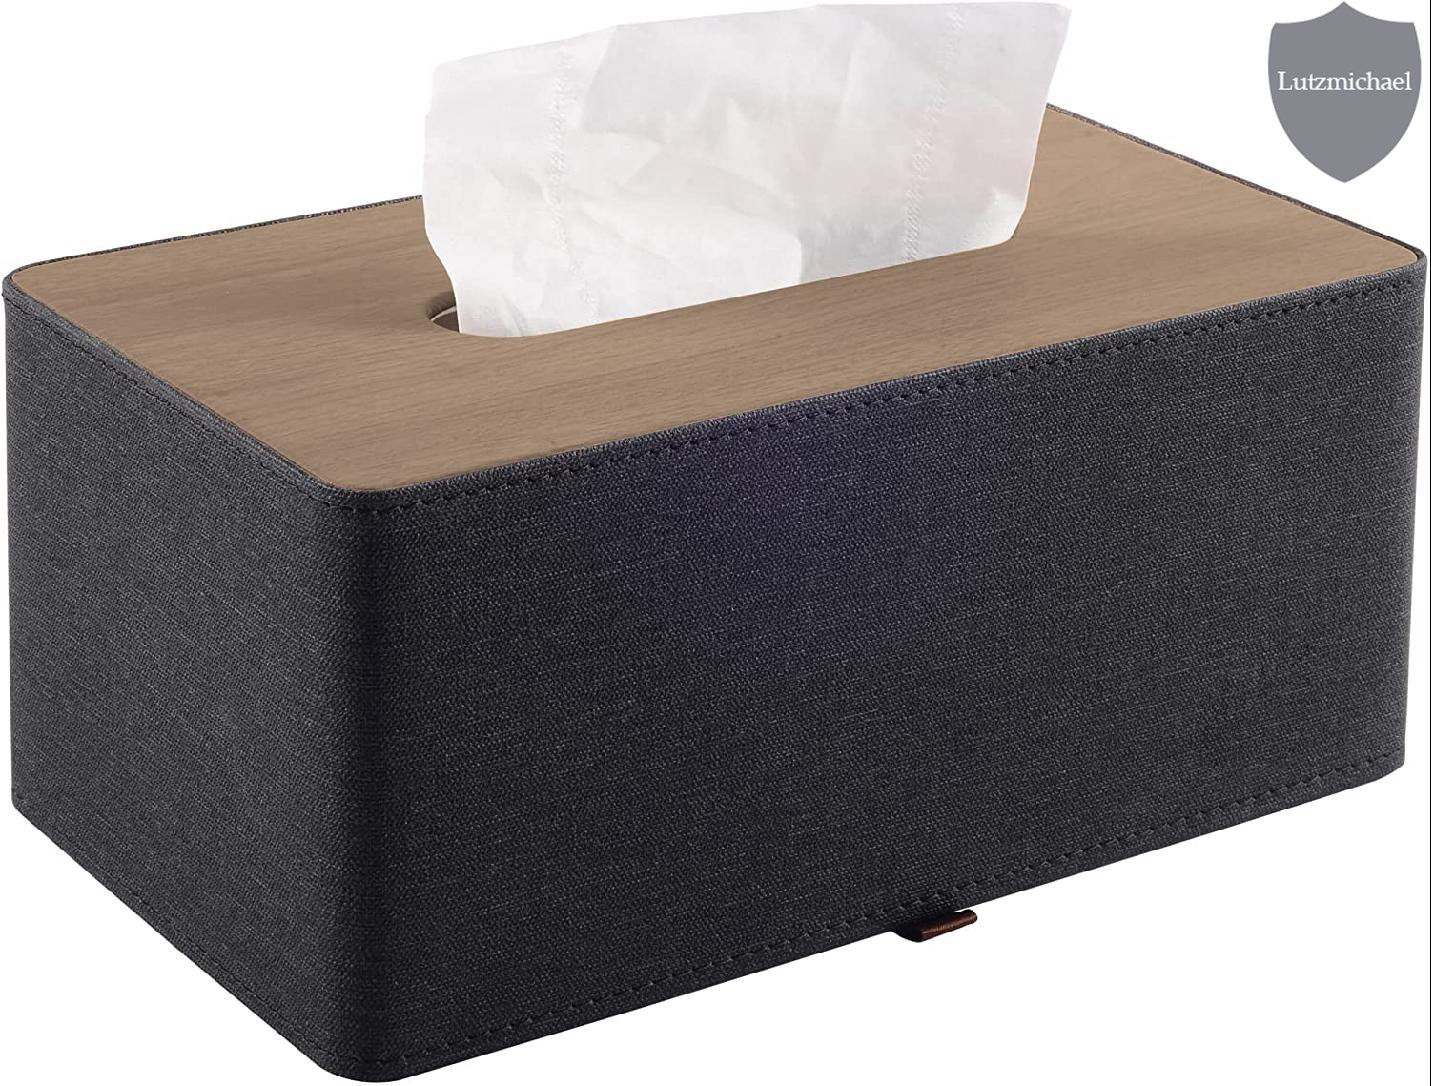 Sedona White Square Tissue Box Cover + Reviews